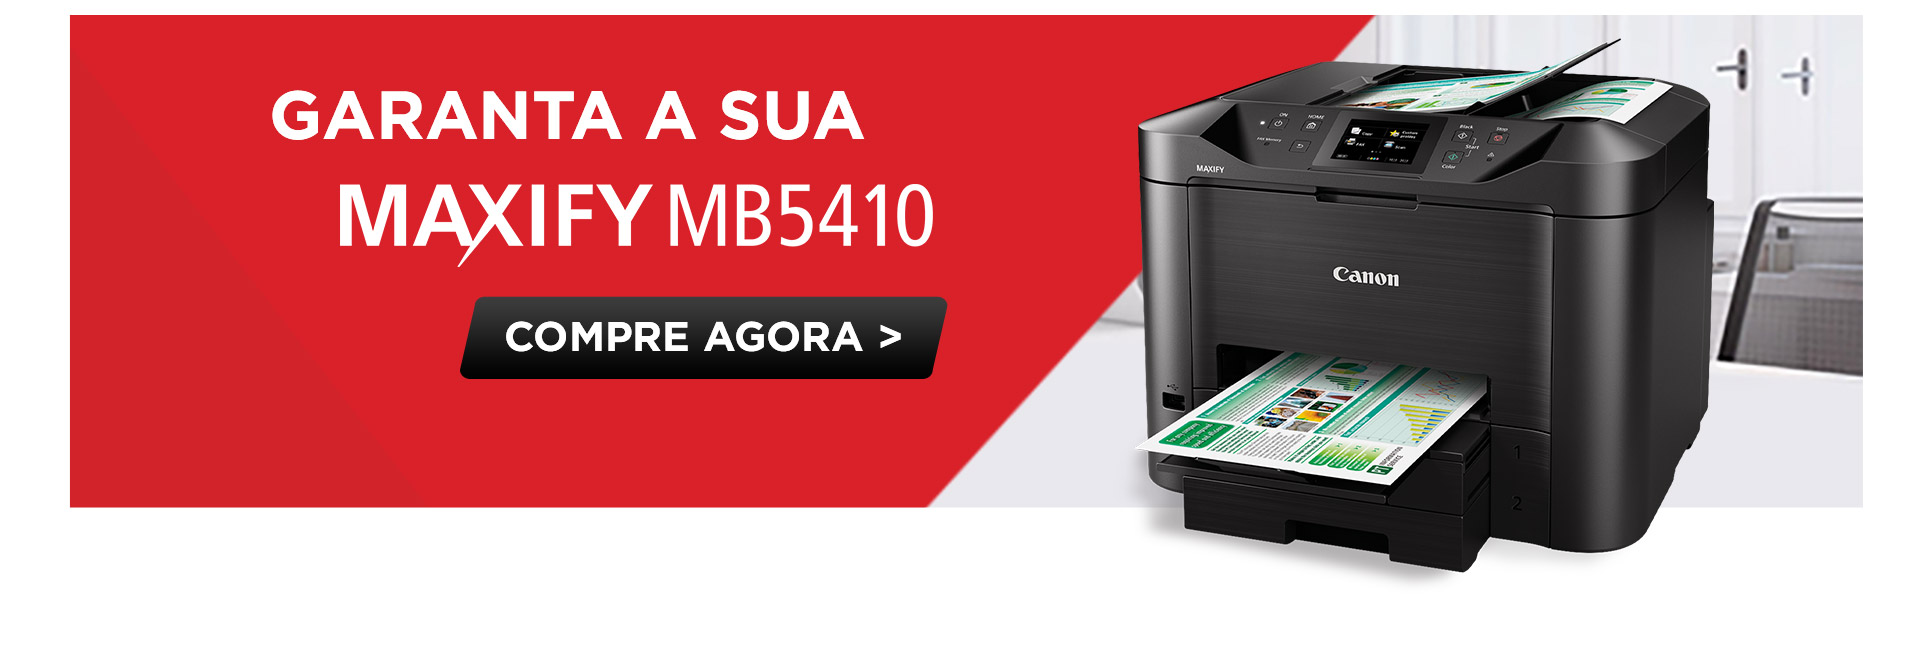 Impressora Multifuncional MAXIFY MB5410